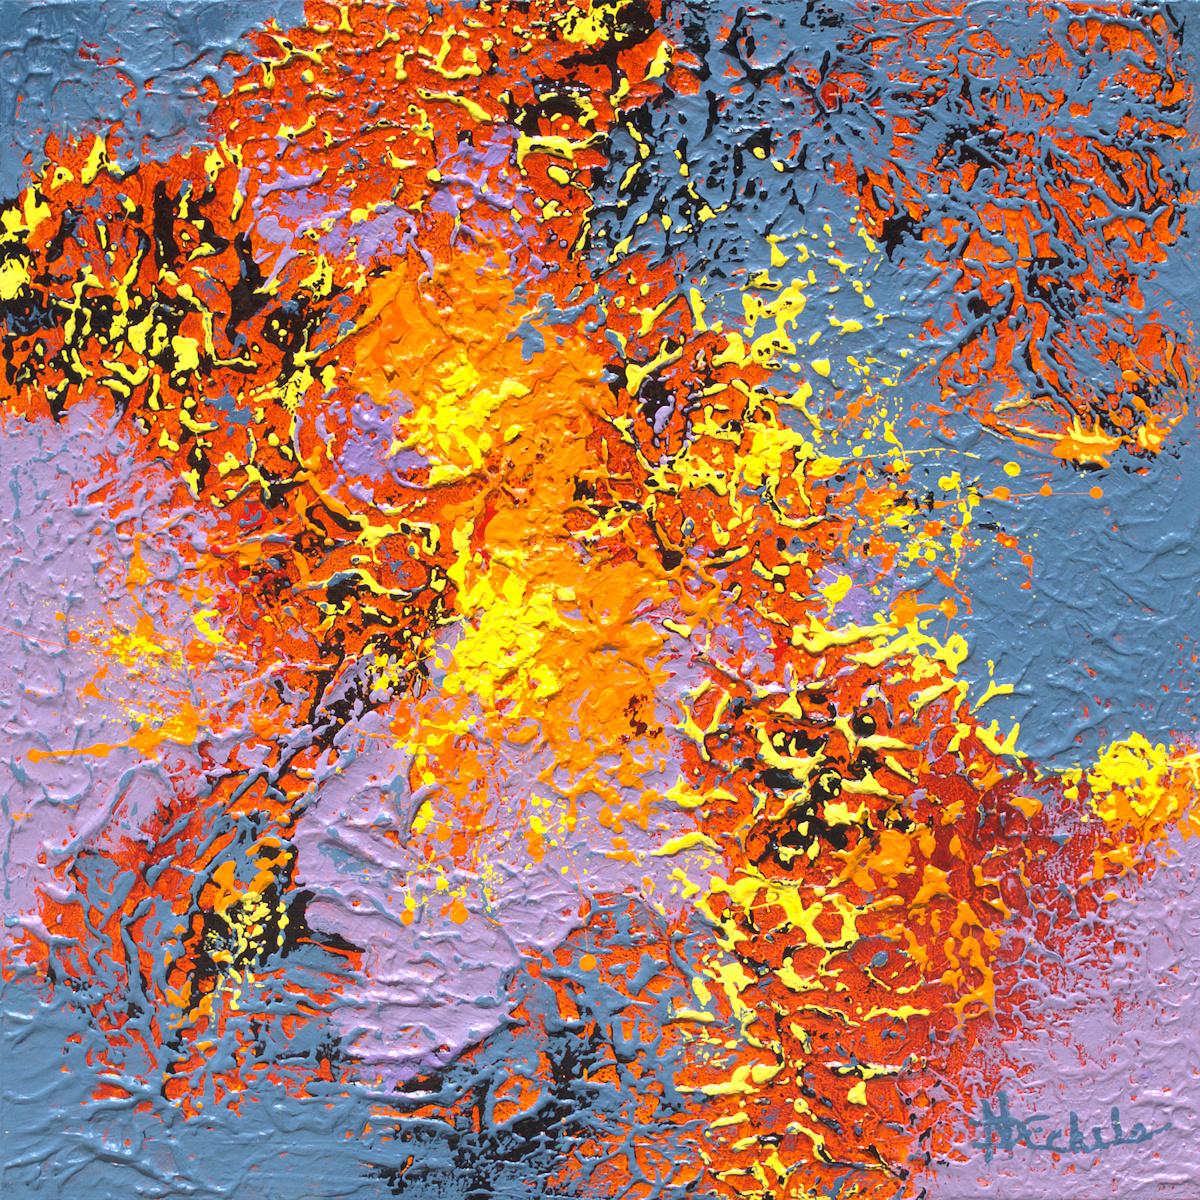 Nancy Eckels Abstract Painting – "Double Burst"  Media-Abstrakte Kunst mit strukturiertem Gold, Orange, Blau und Lavendel